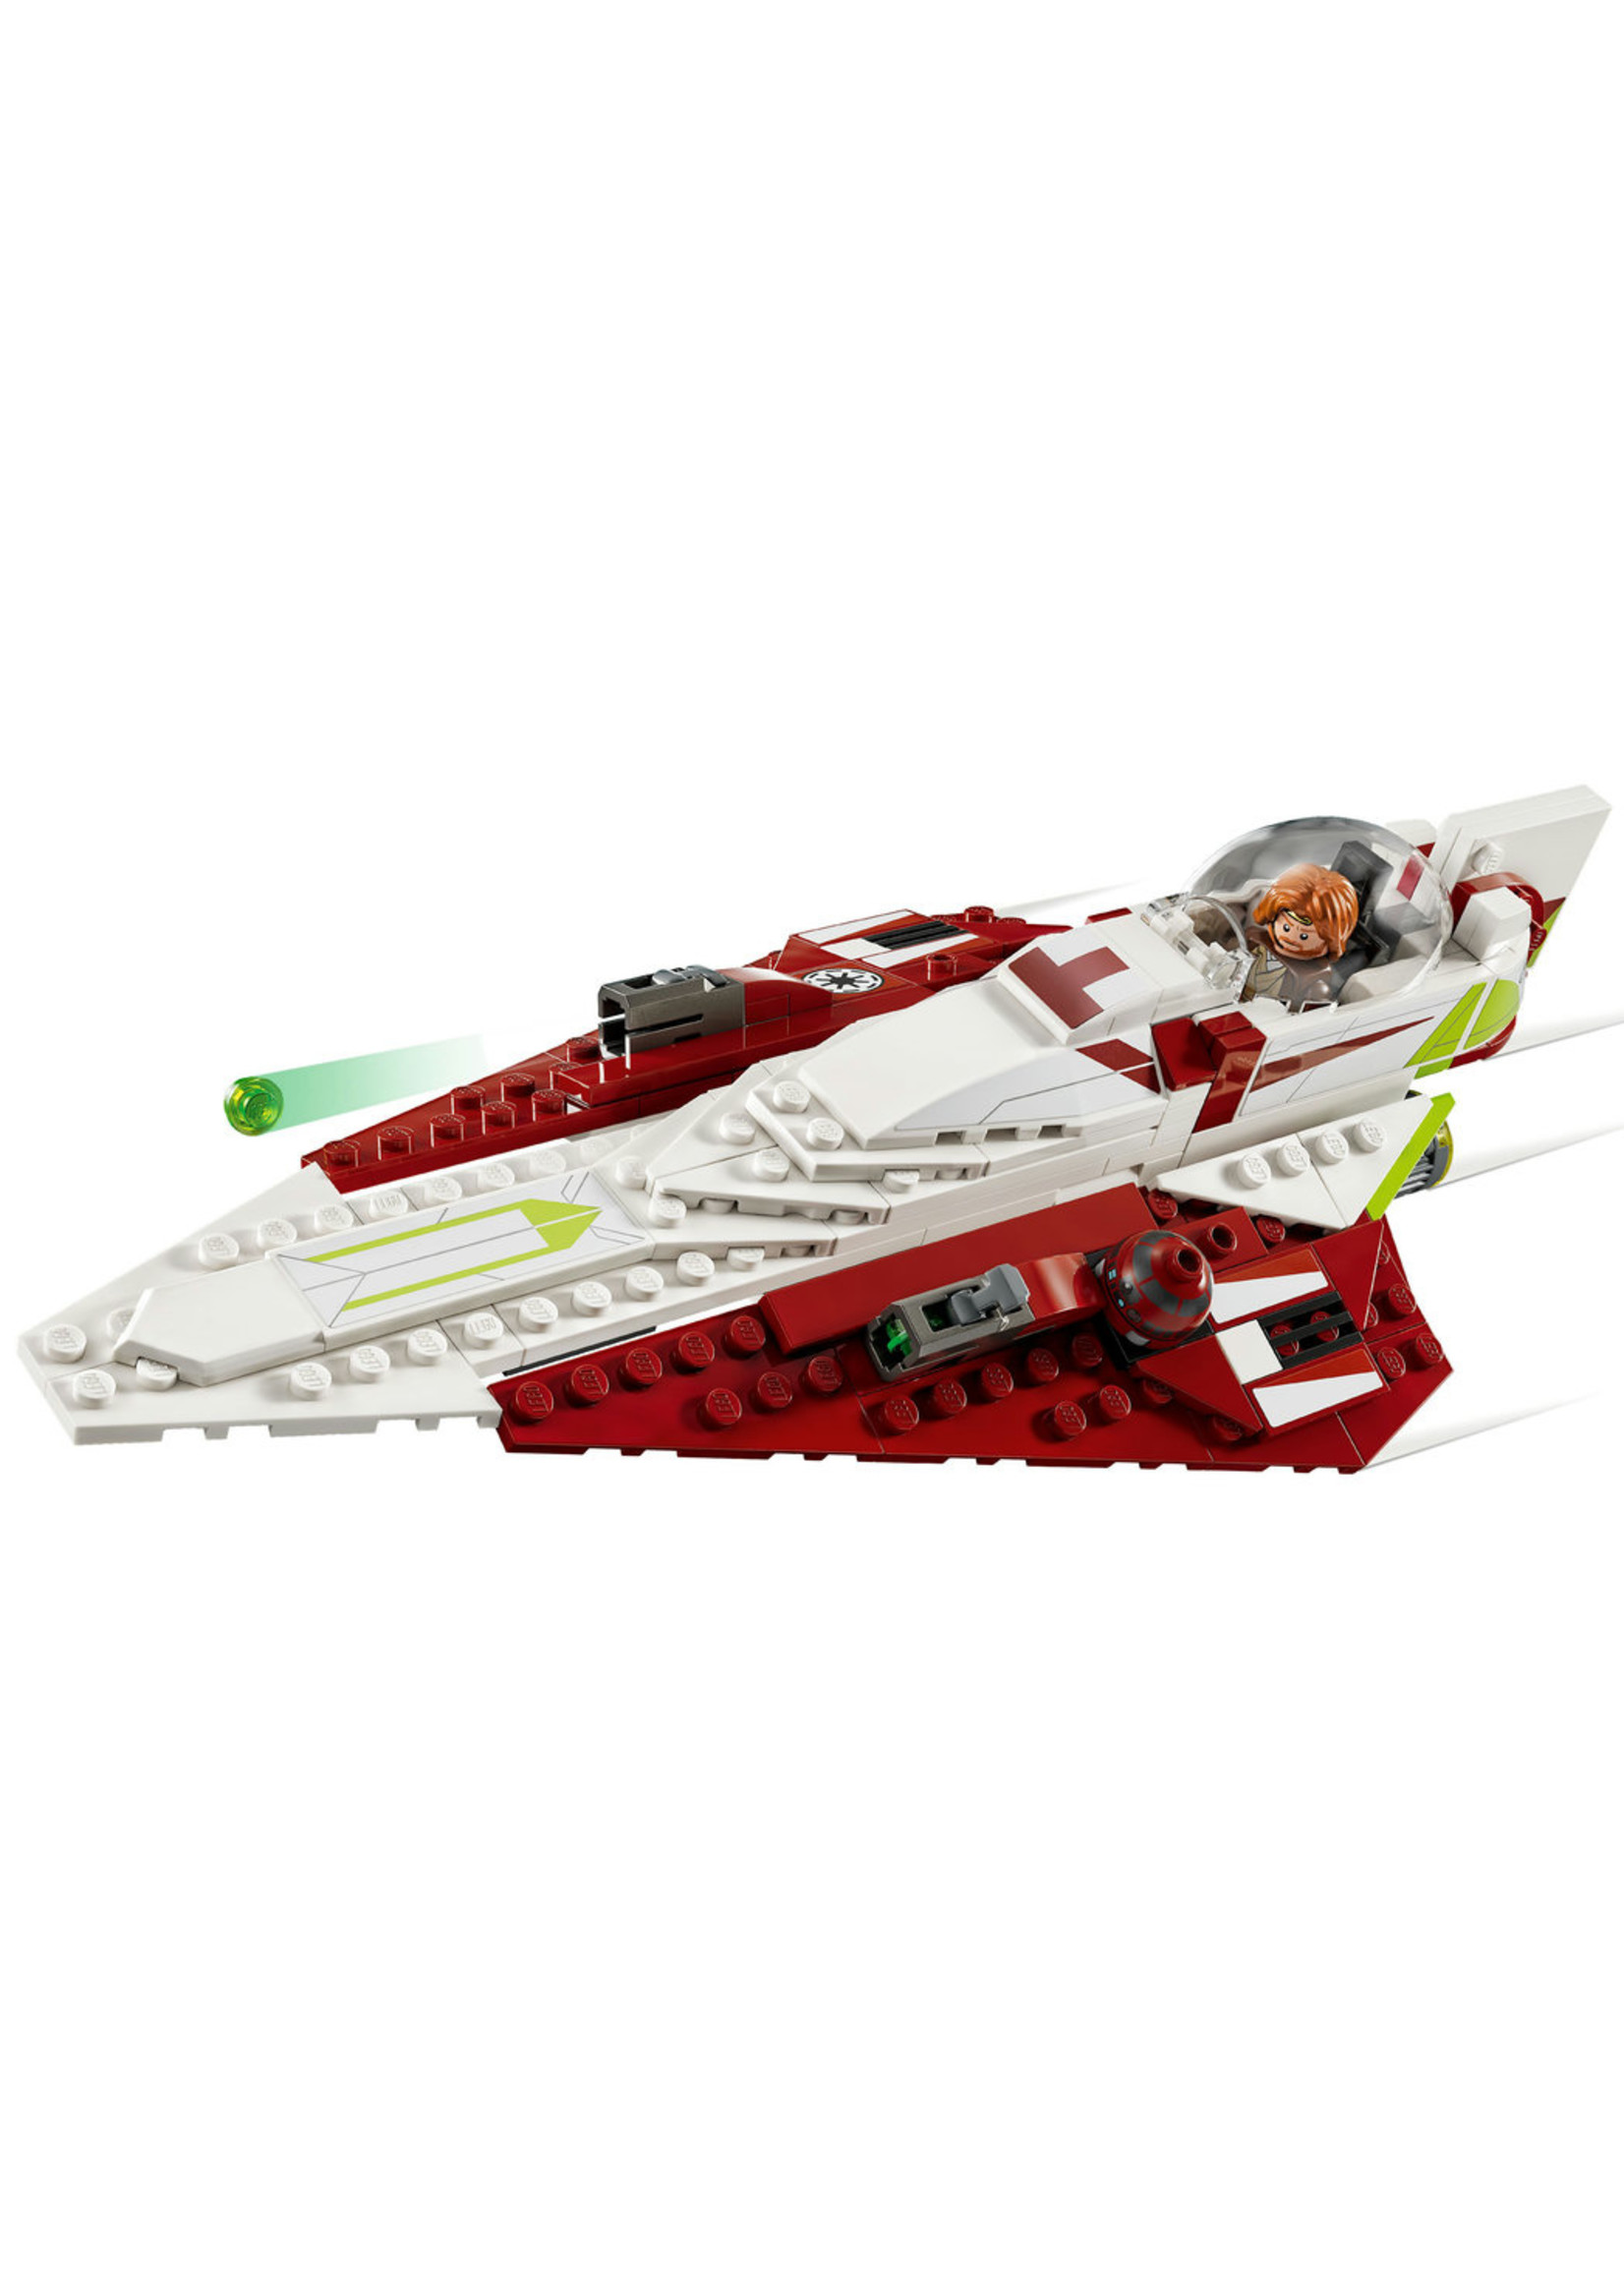 LEGO 75333 - Obi-Wan Kenobi's Jedi Starfighter